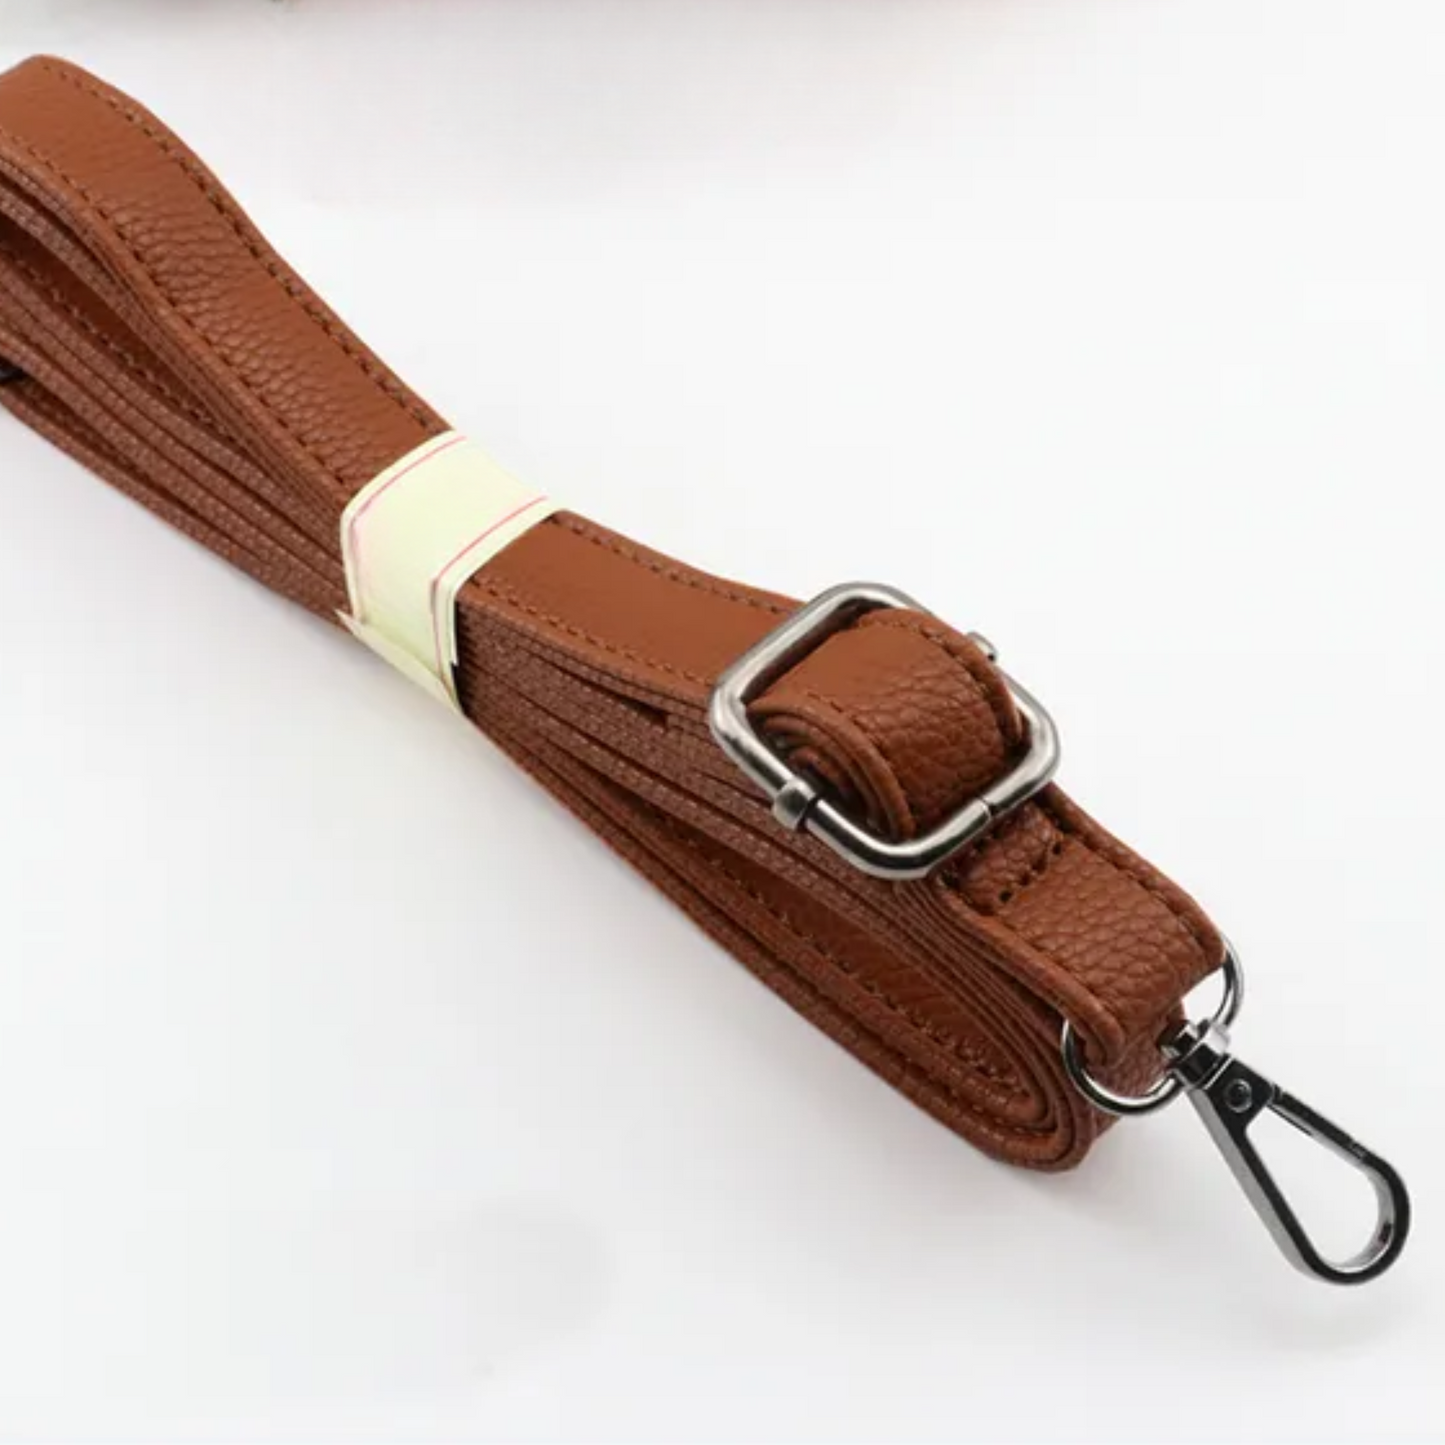 Adjustable Replacement bag crossbody purse strap